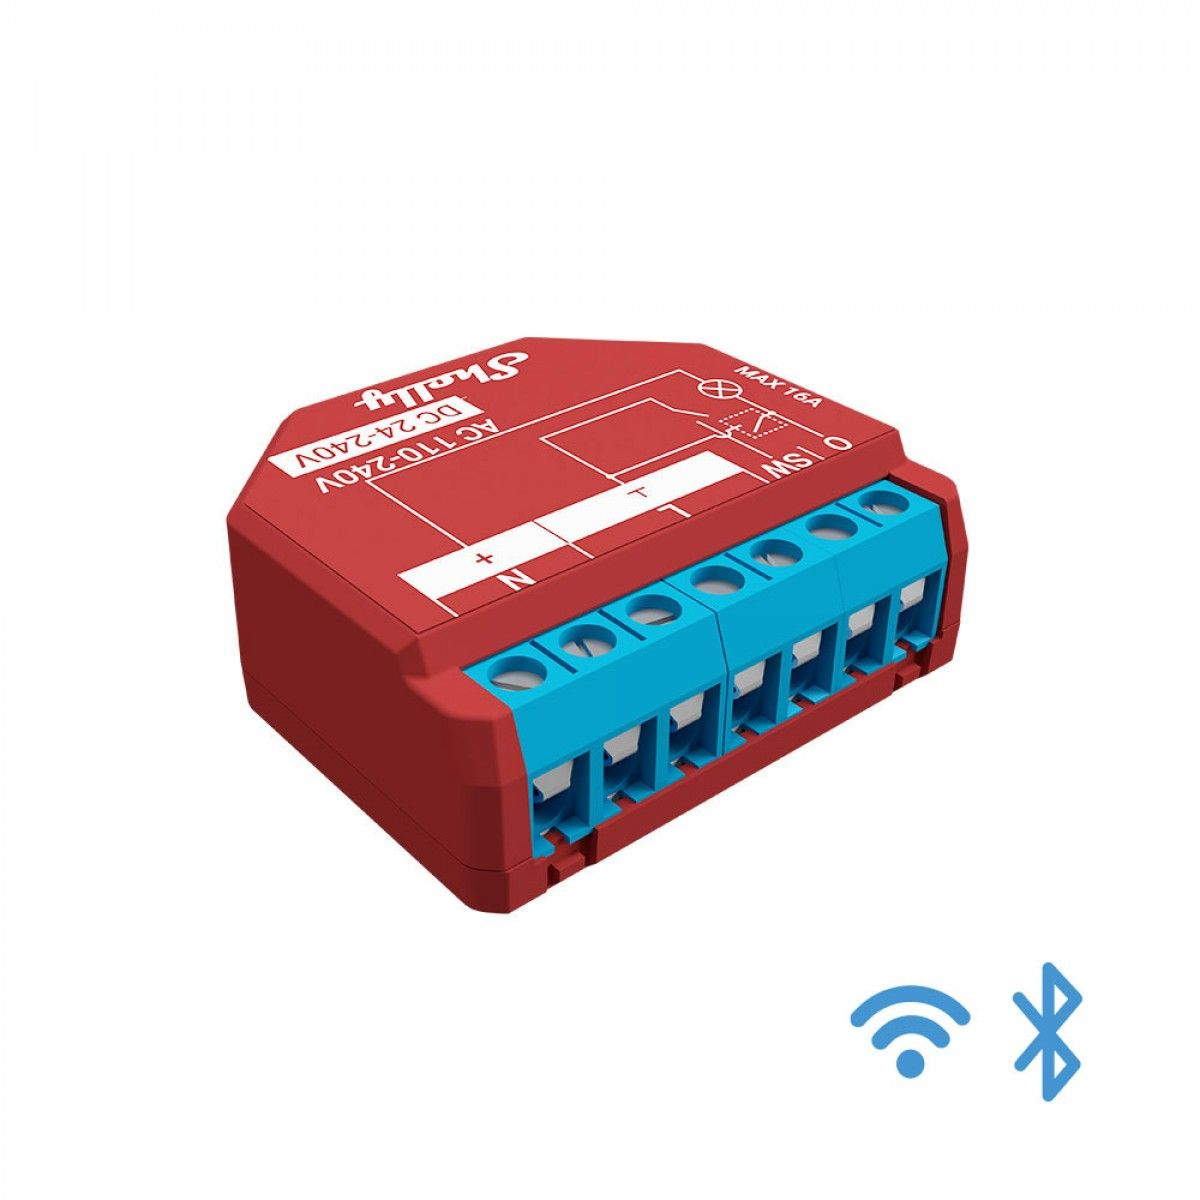 Shelly® Plus 1PM One Smart Wifi WLAN Funk Schalter Relais Schaltaktor max 16A mit Leistungsmessfunktion